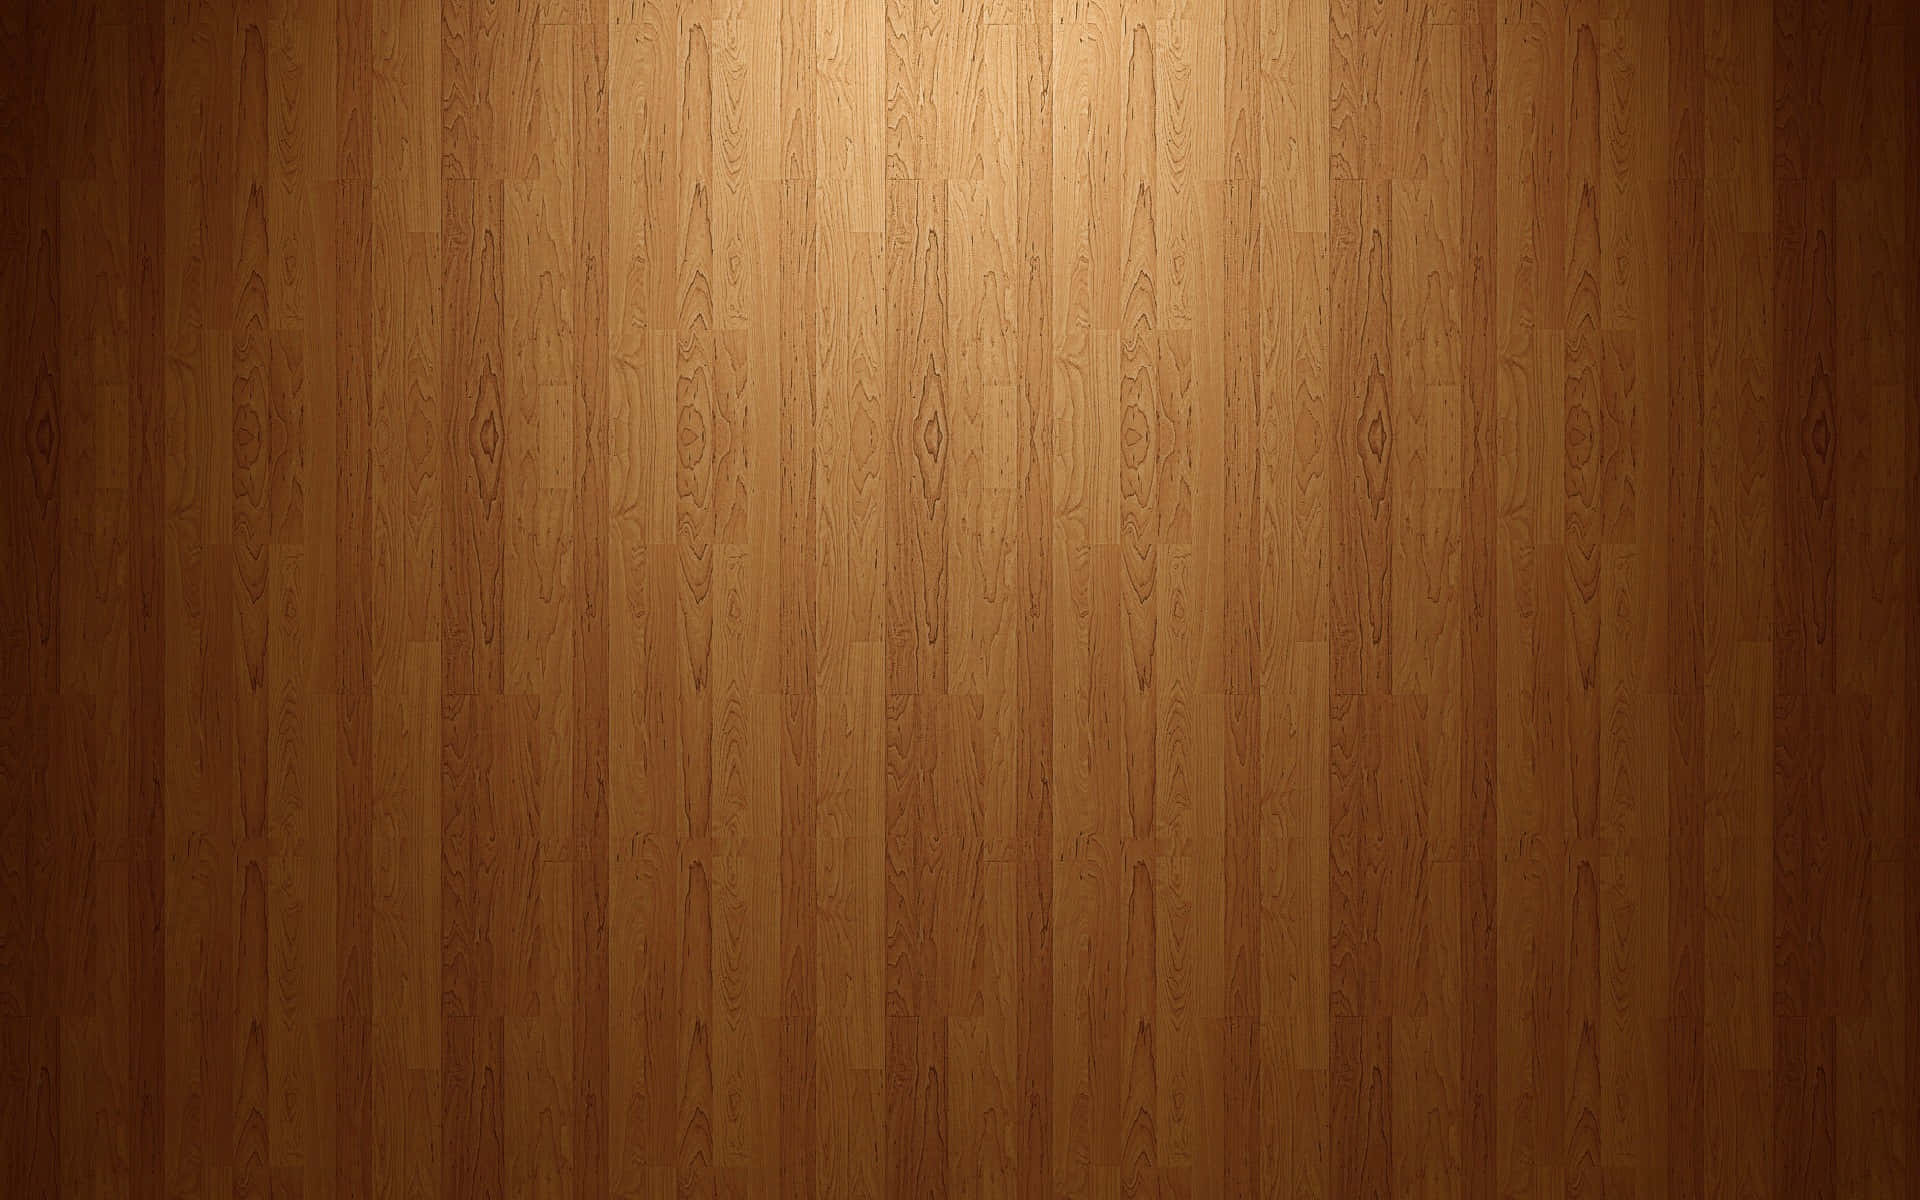 Rich Brown Wooden Planks Background Wallpaper